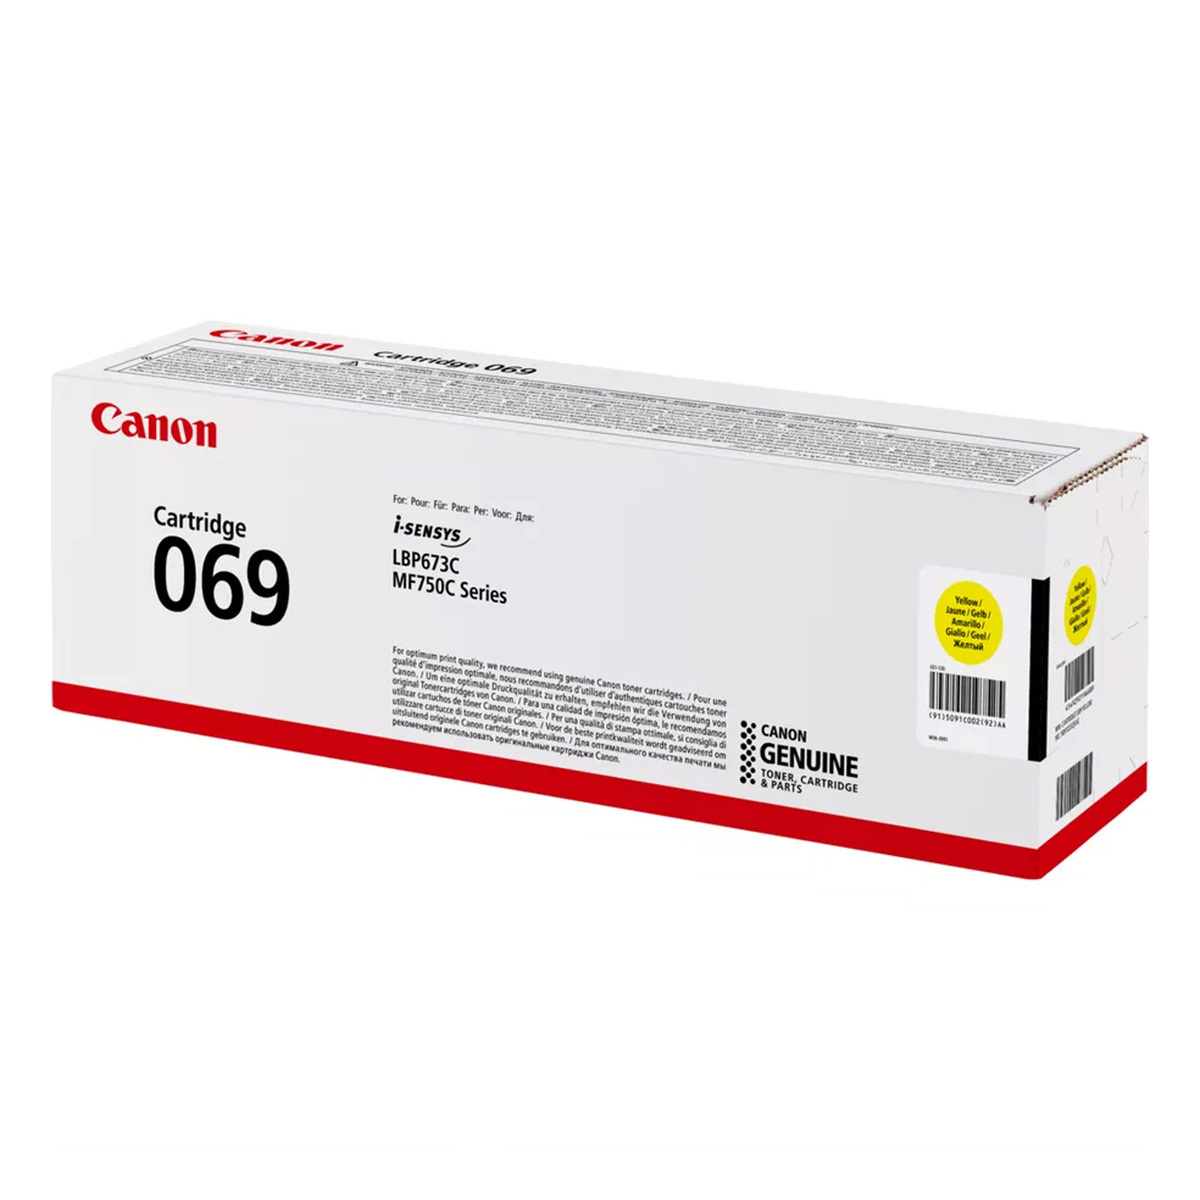 Canon Toner Cartridge, Yellow, 069